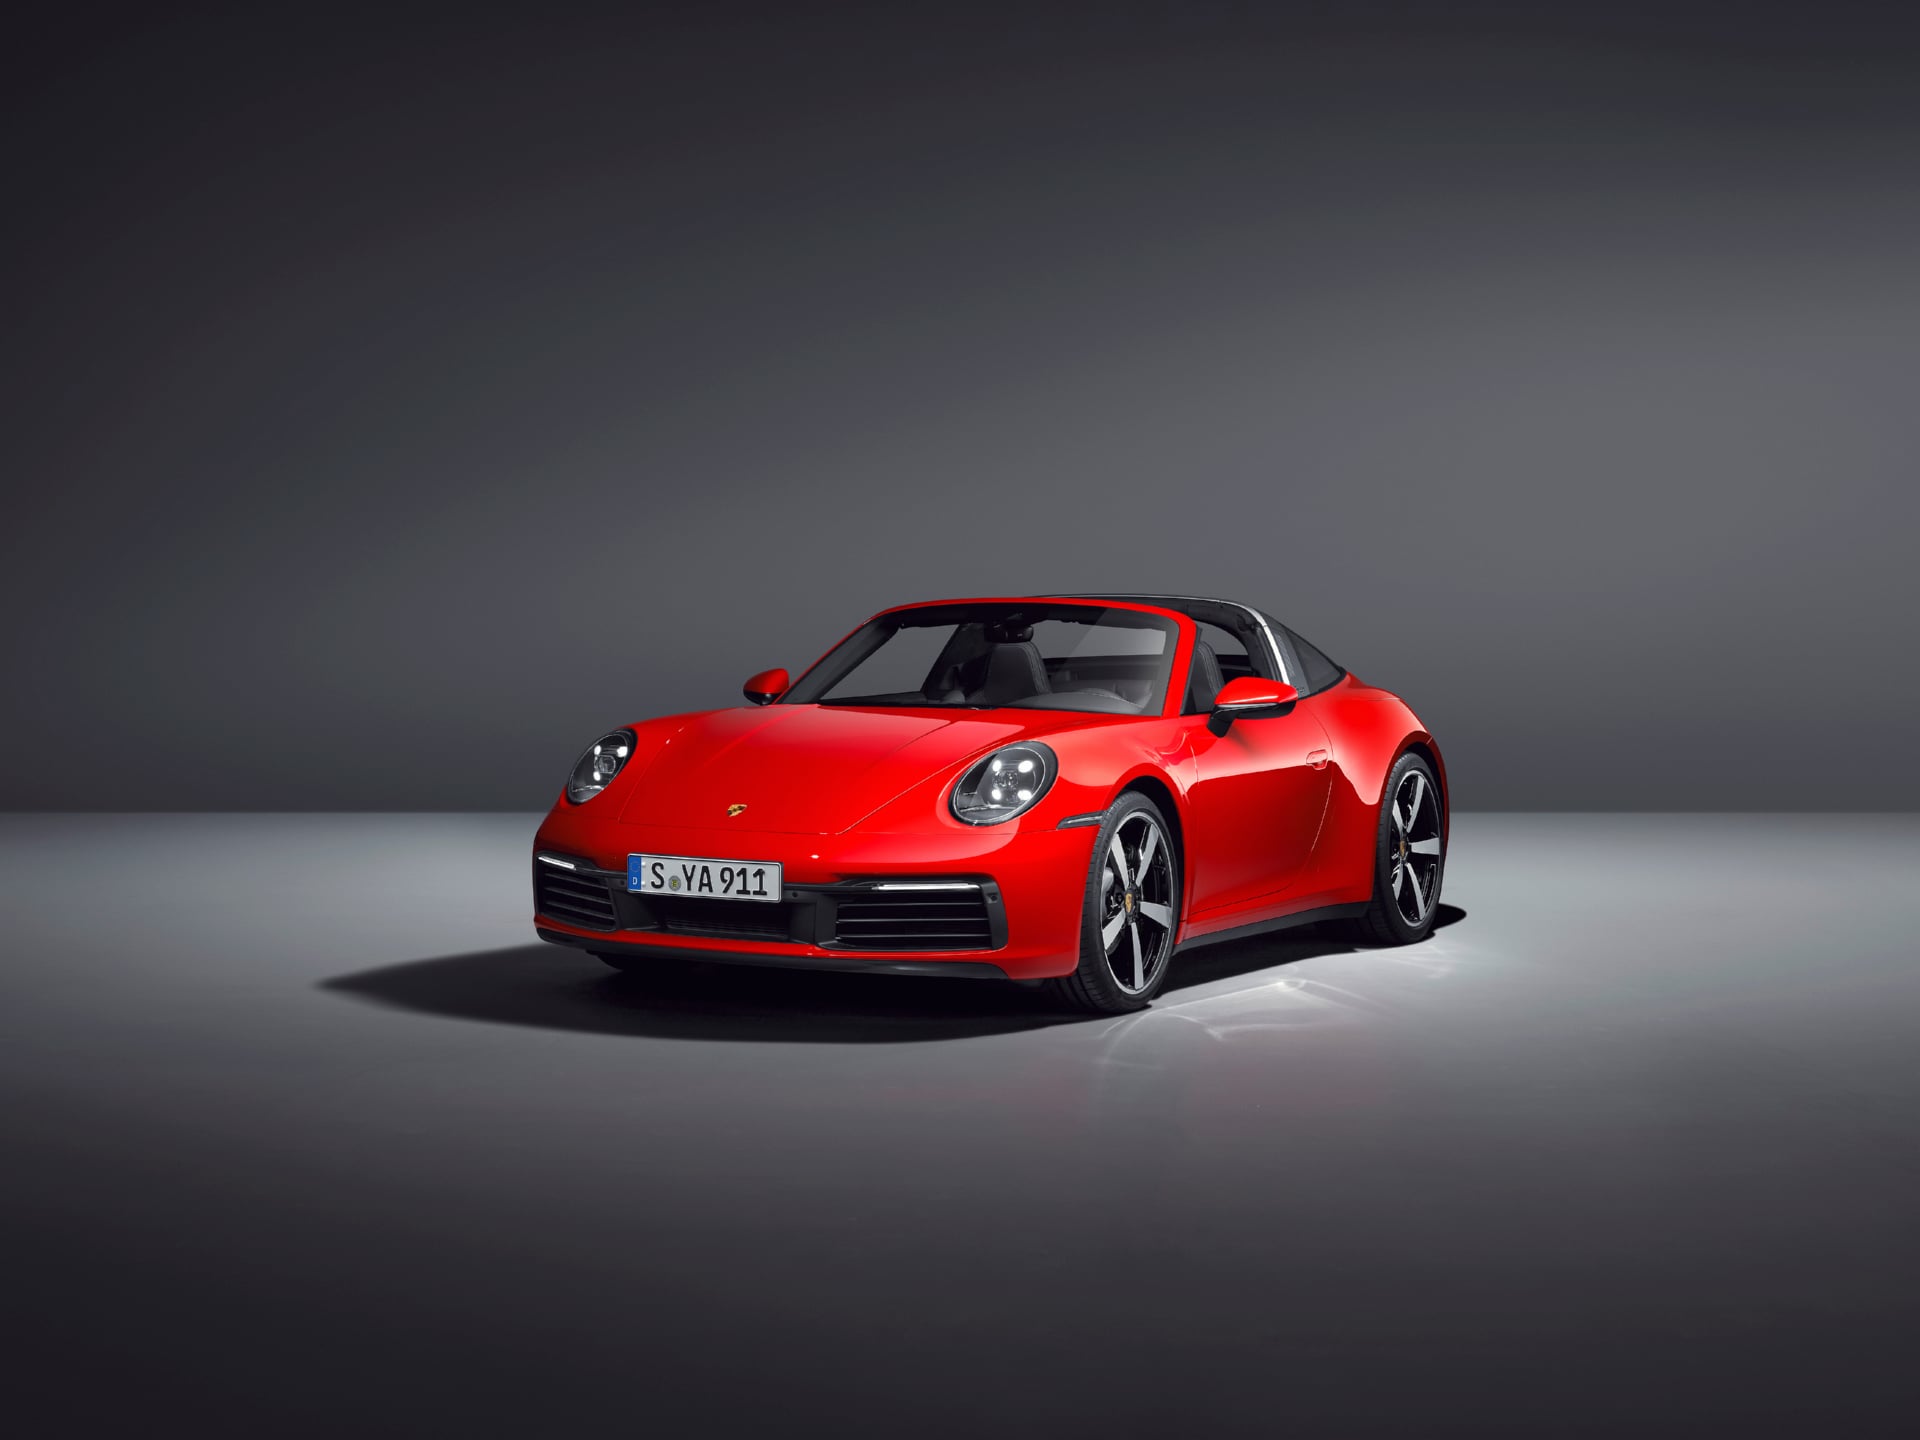 Porsche 911 Targa 4 at 1024 x 1024 iPad size wallpapers HD quality